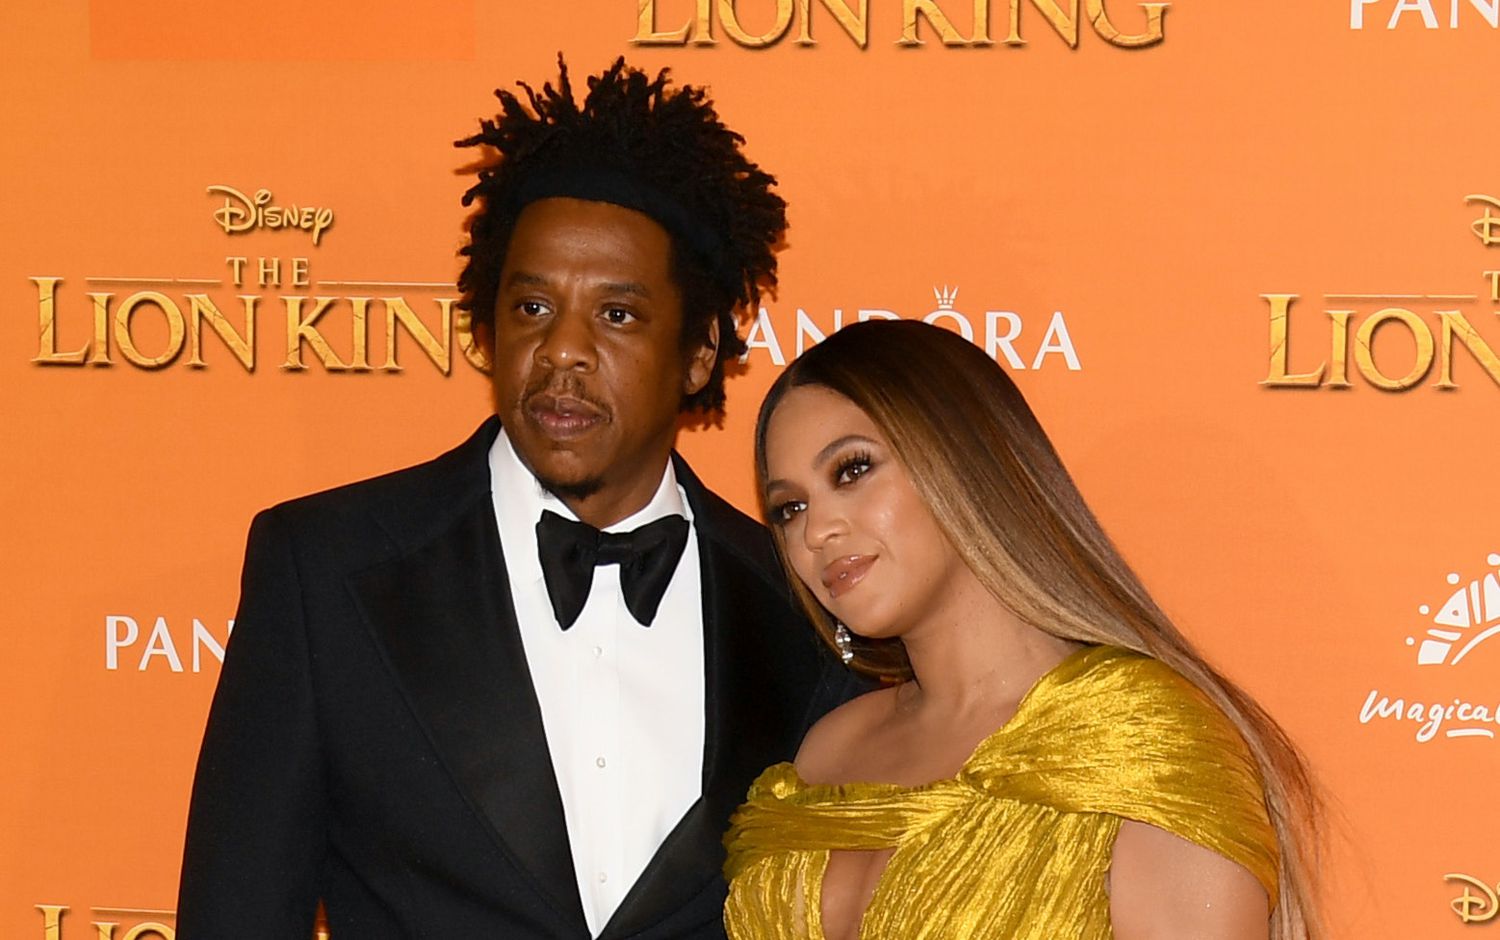 Jay-Z wearing a black suit and Beyoncé wearing a yellow dress